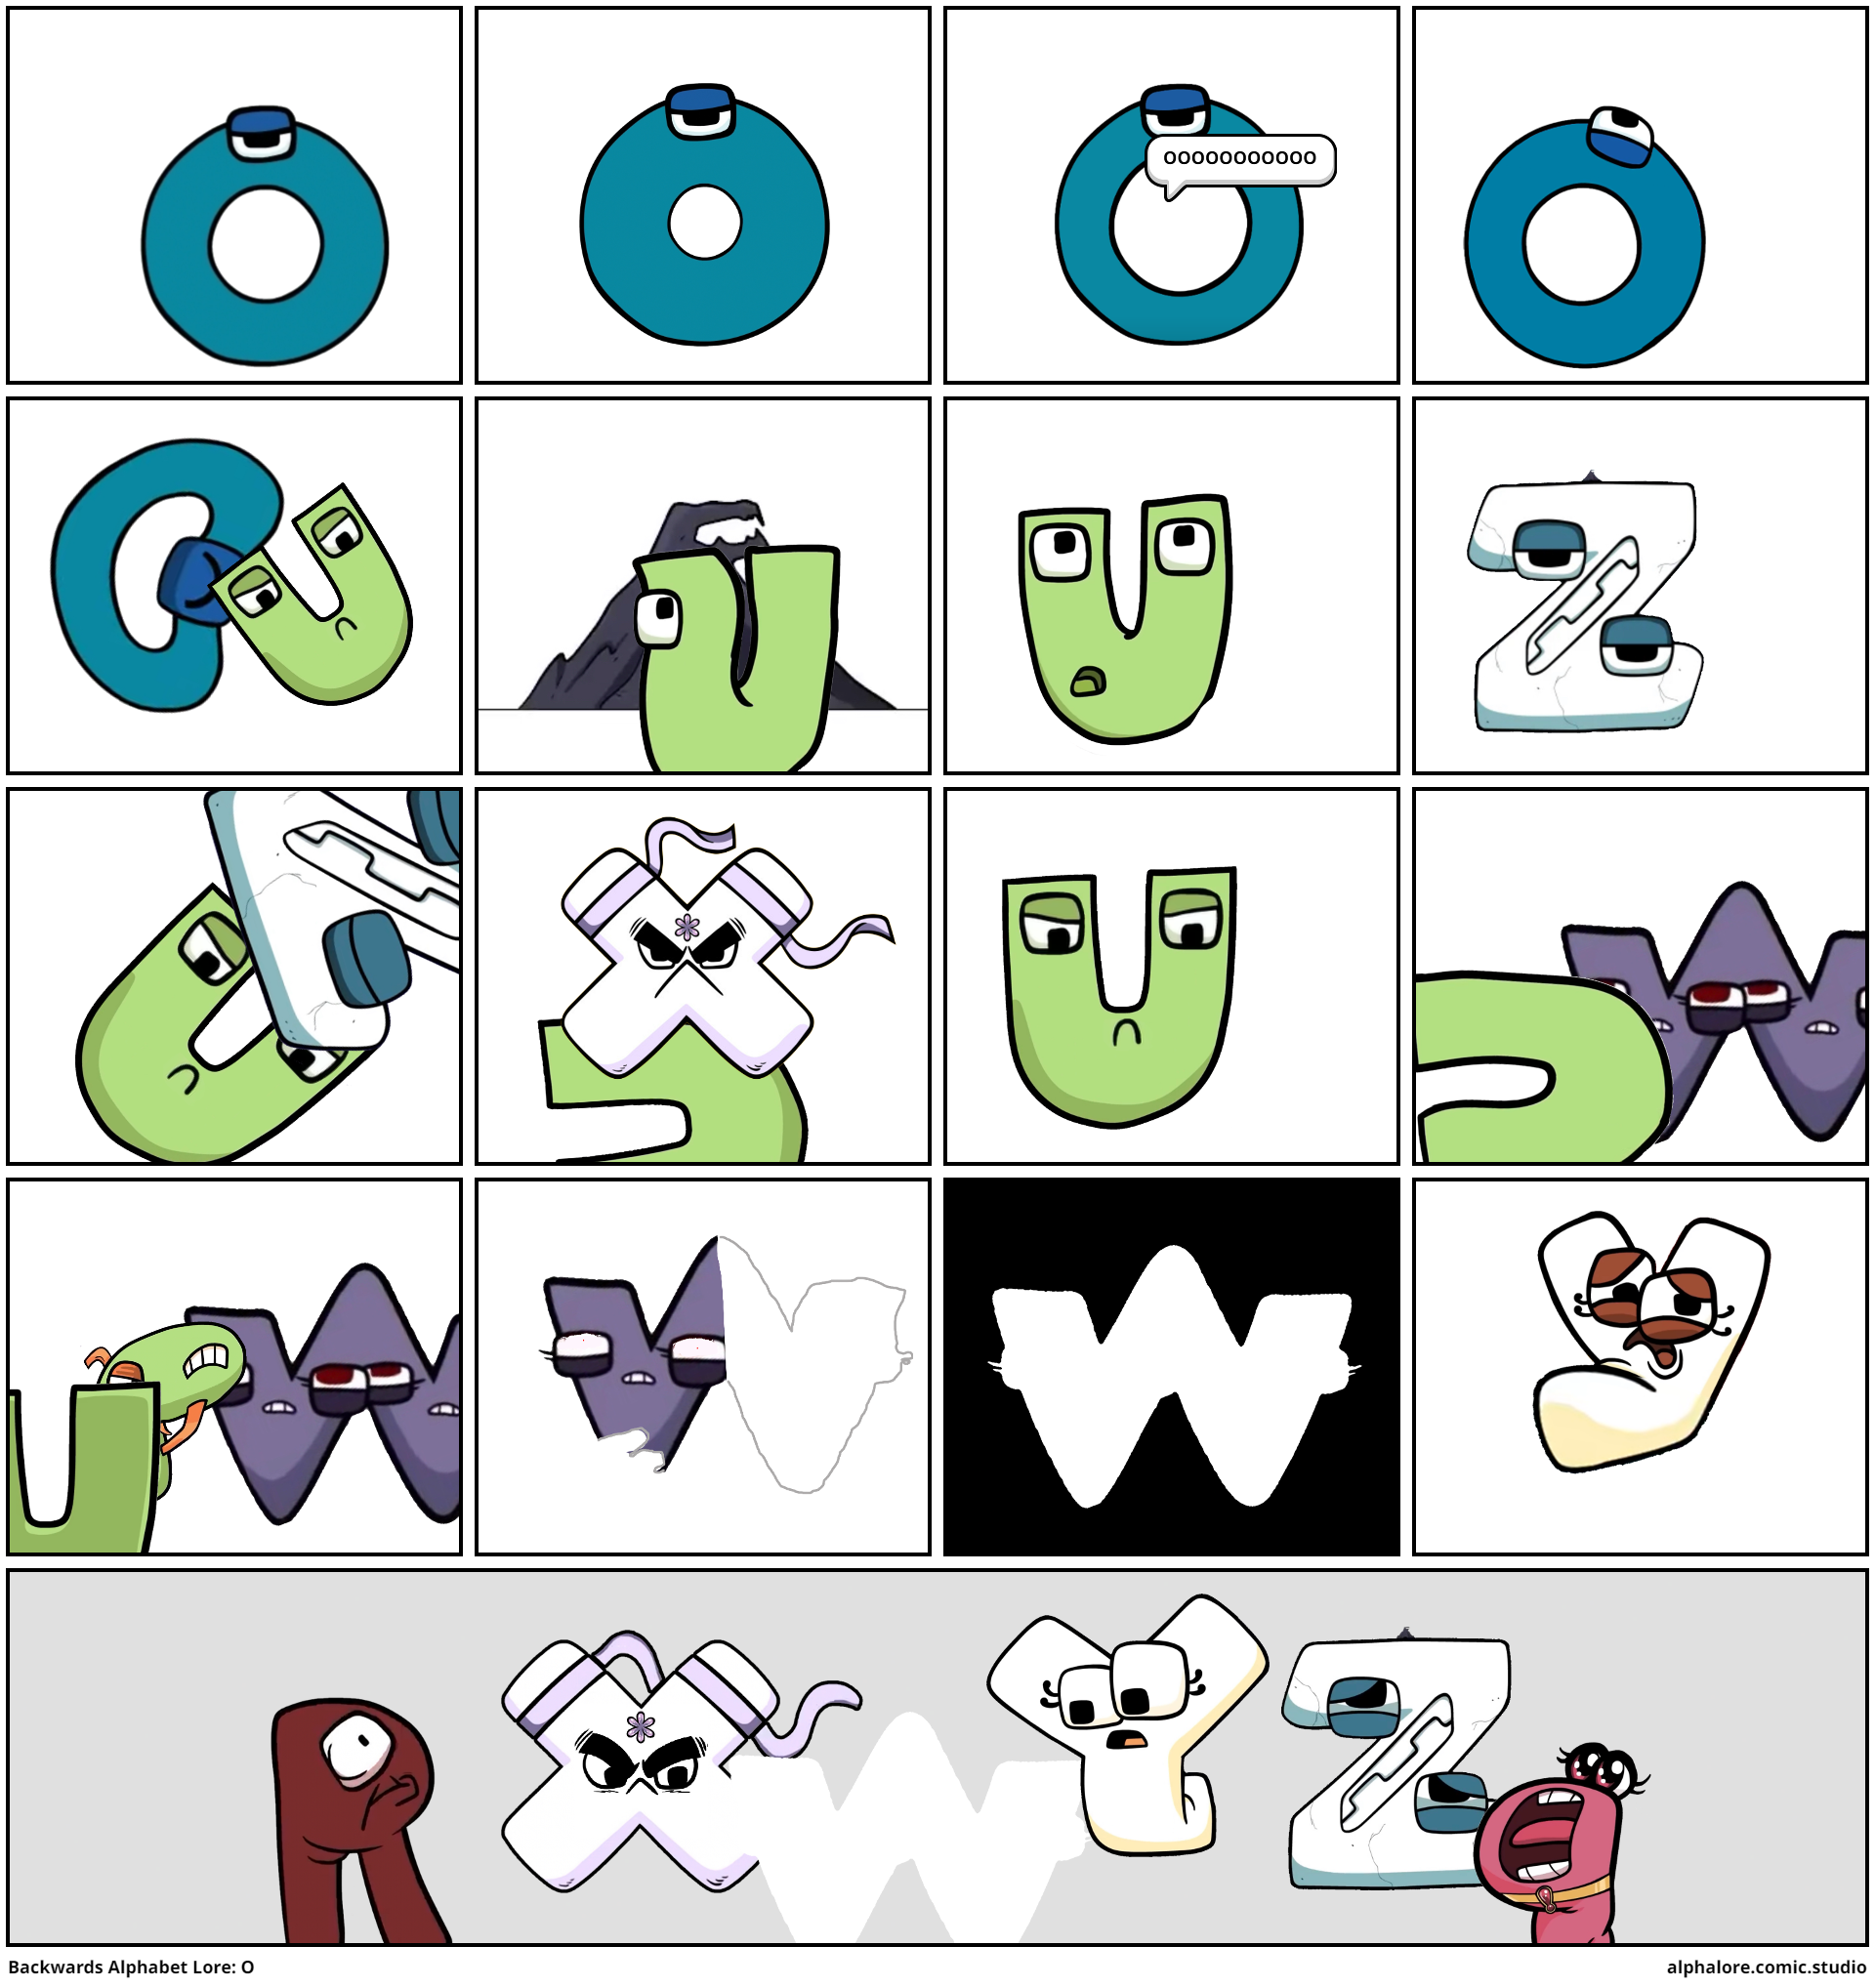 Backwards Alphabet Lore: O - Comic Studio